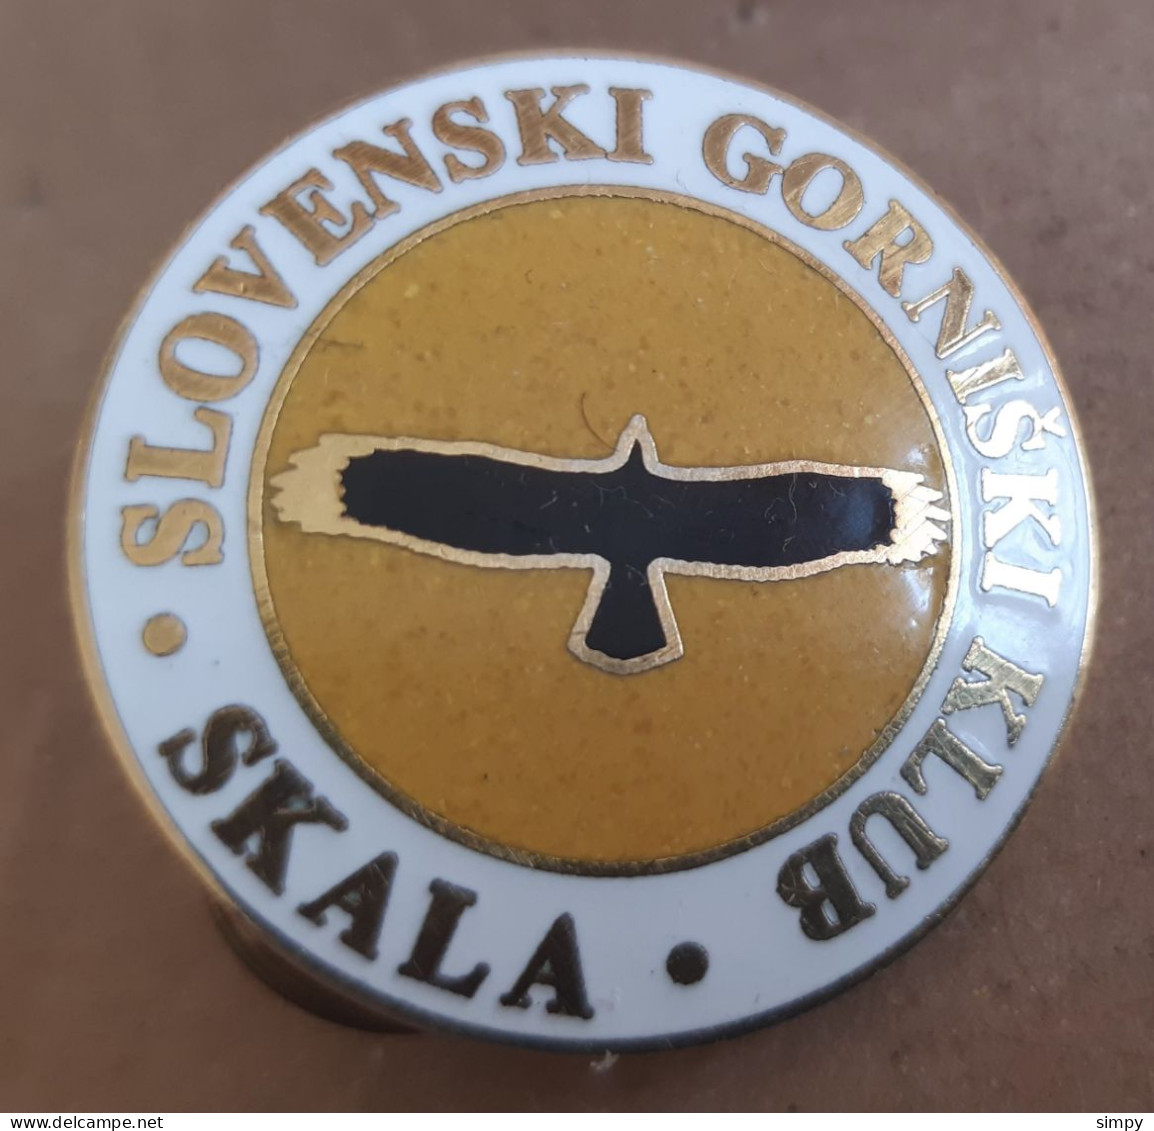 Mountaineering Club Slovenski Gorniski Klub SKALA Enamel Pin Badge Slovenia - Alpinismus, Bergsteigen